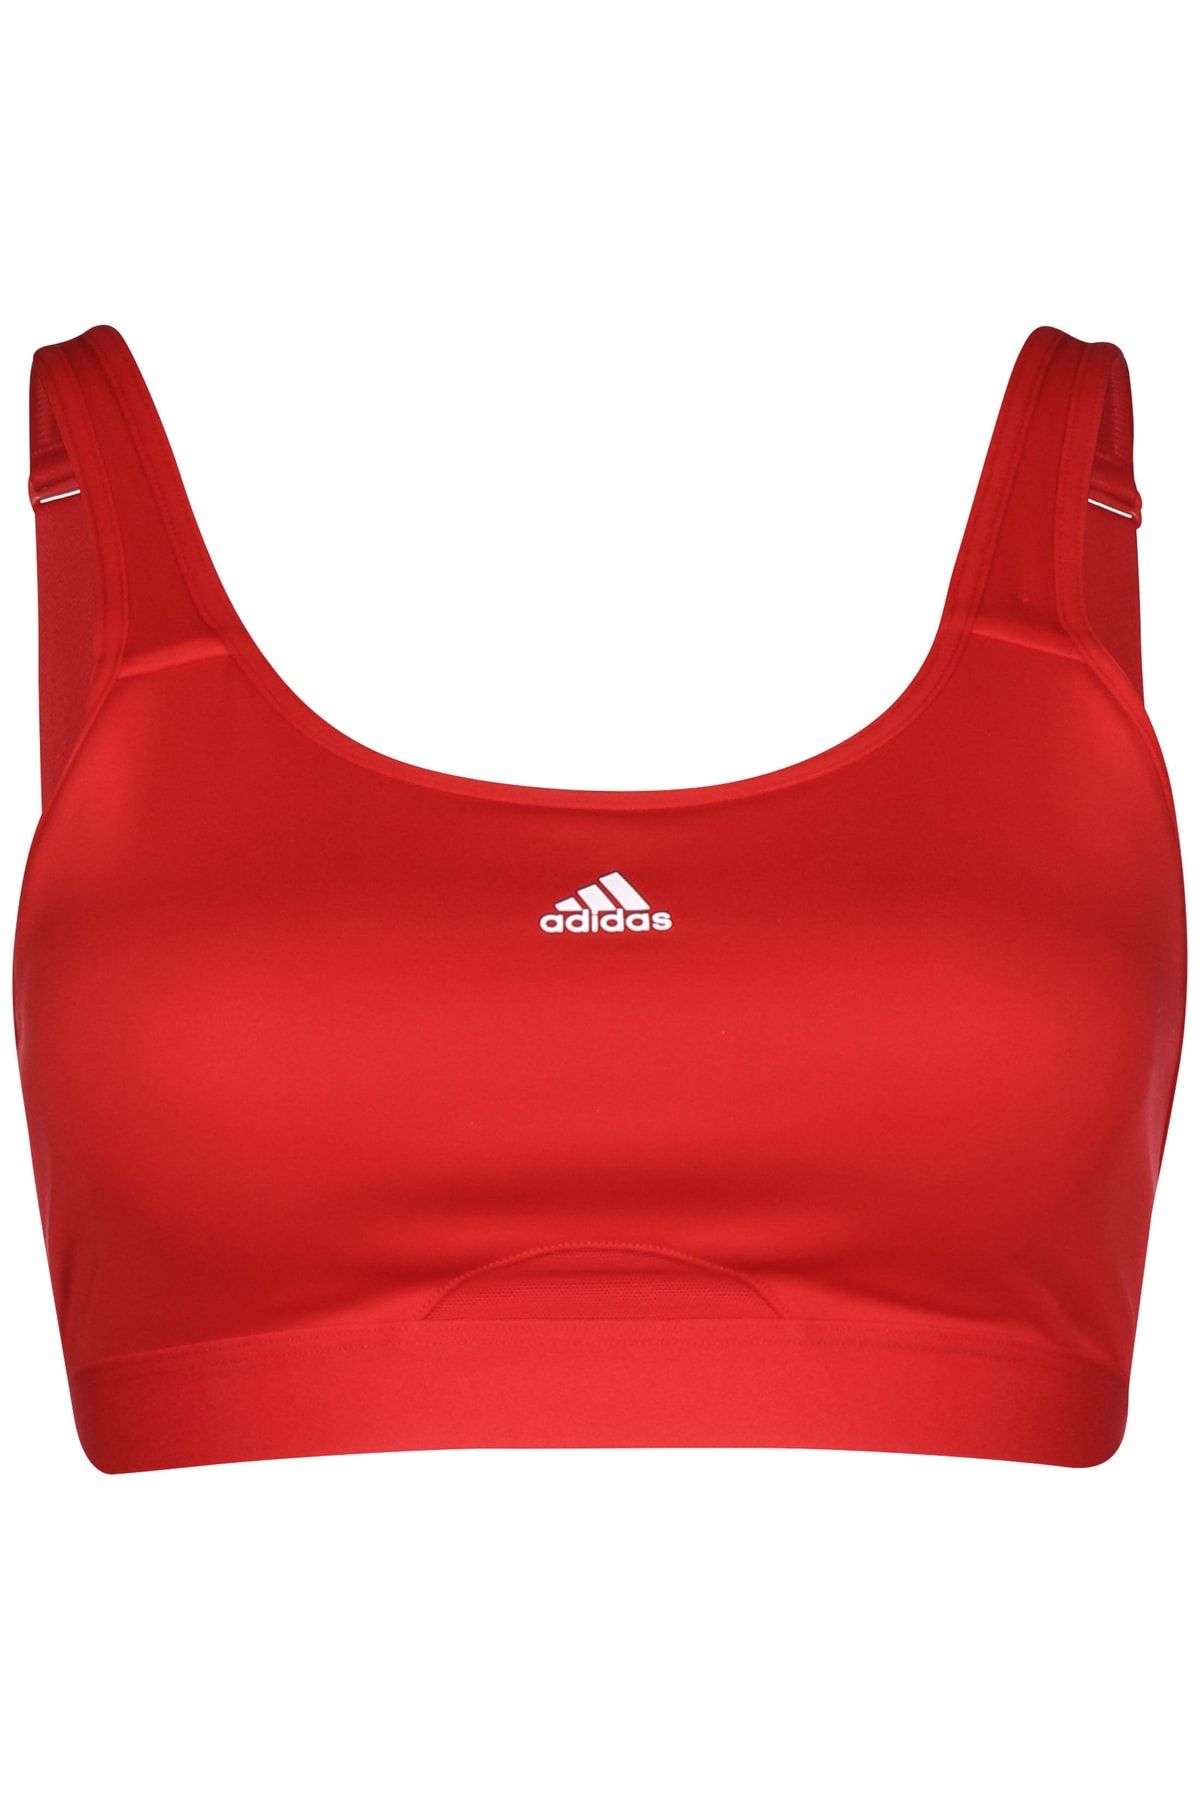 red color block sports bra